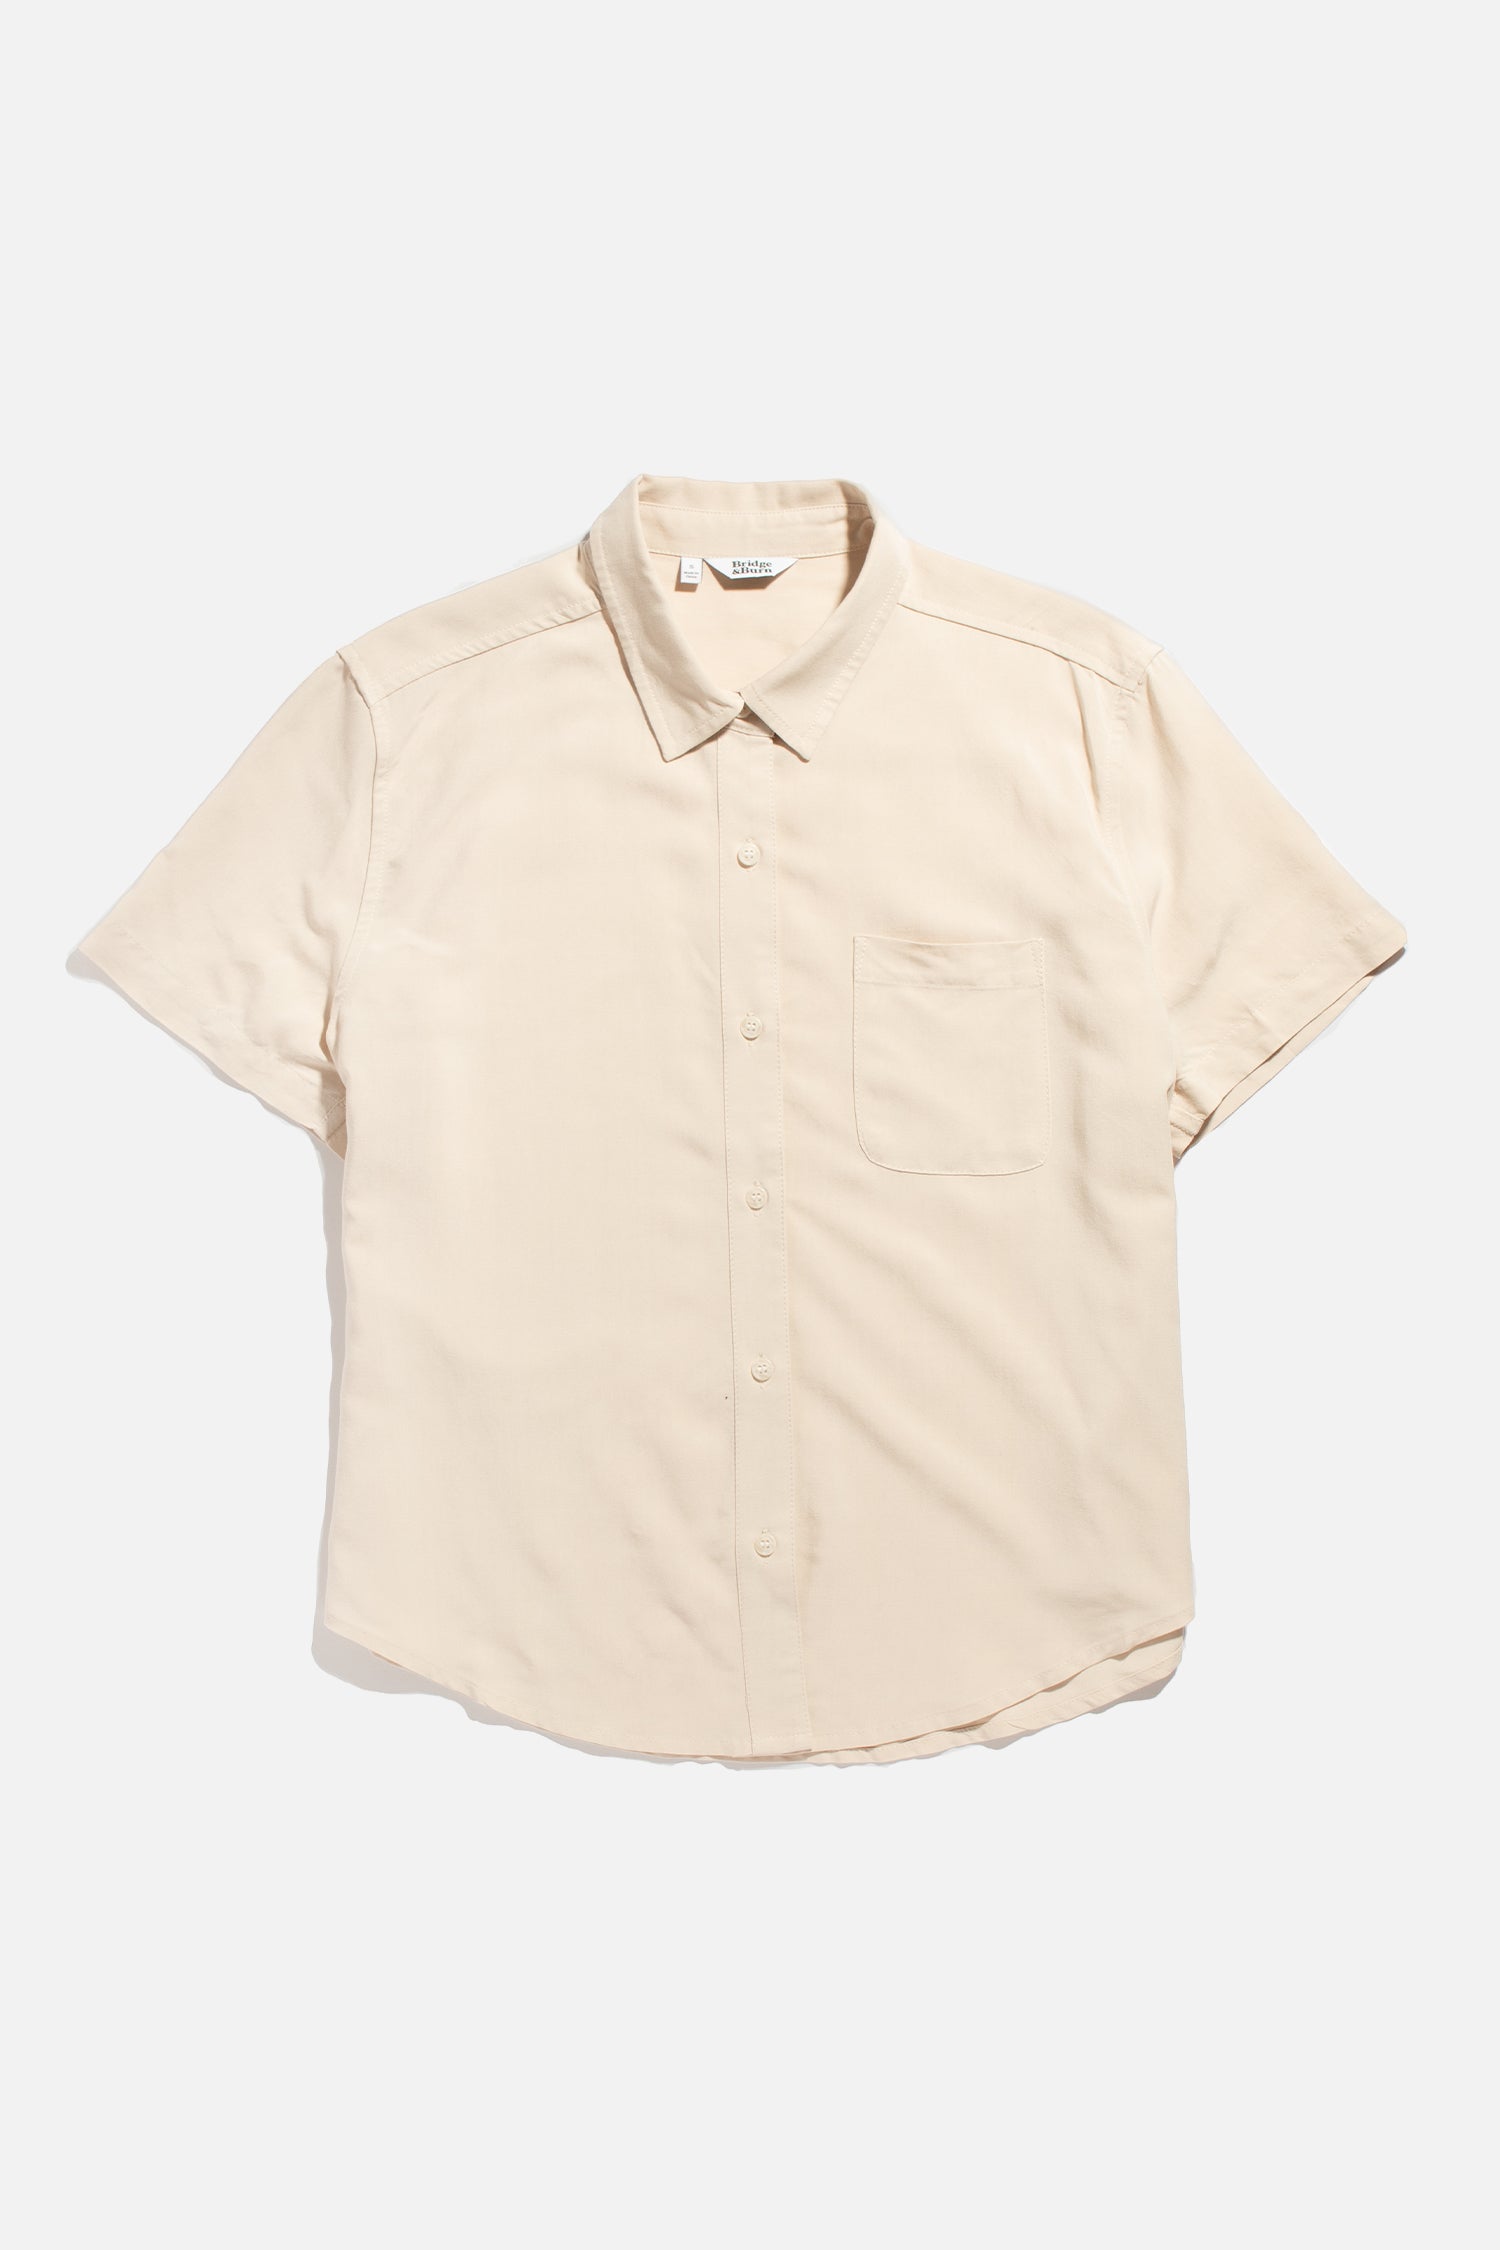 Greer Cropped Shirt / Cream Poplin